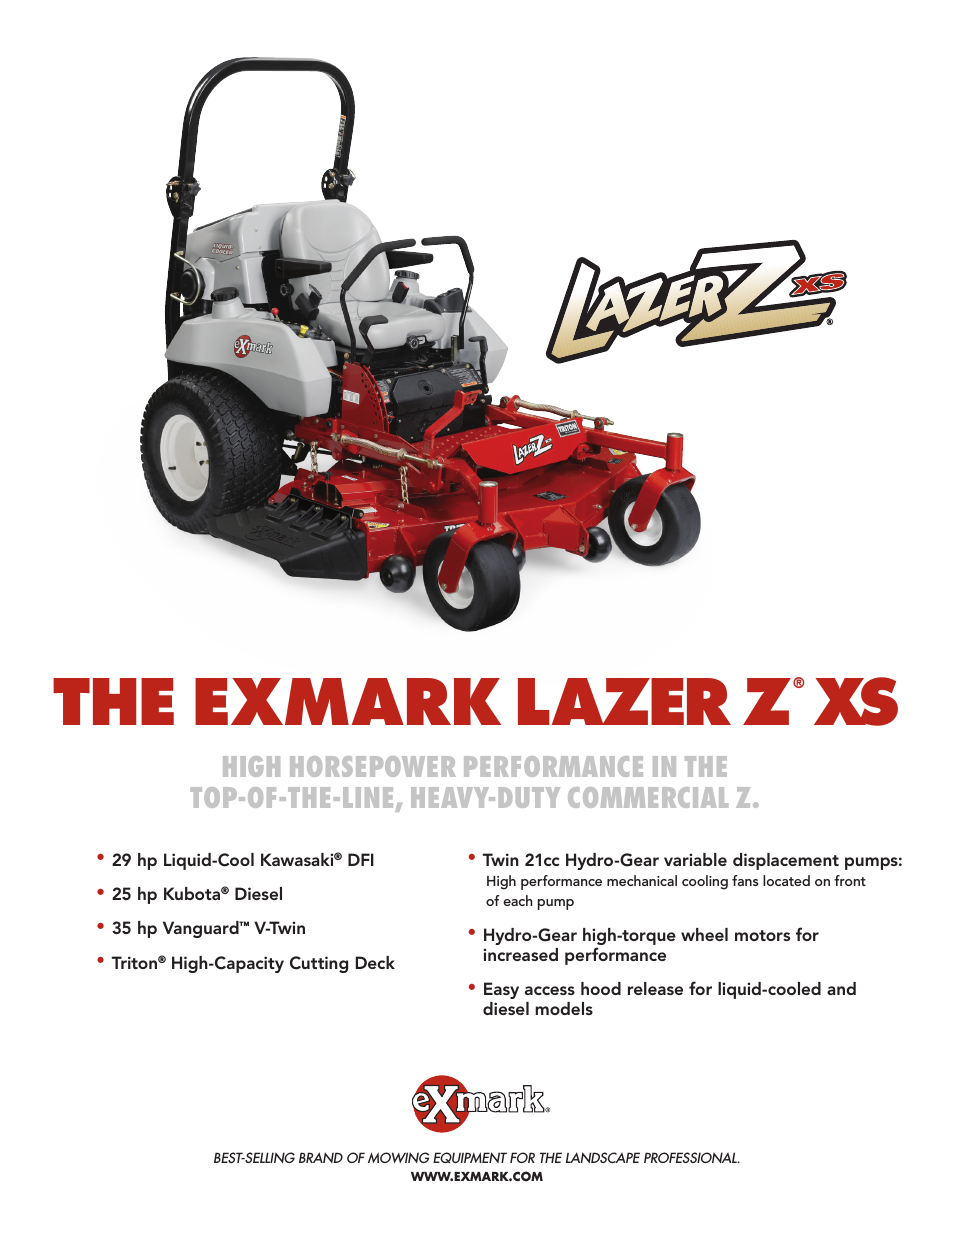 Lazer Z XS lXs29lKa725